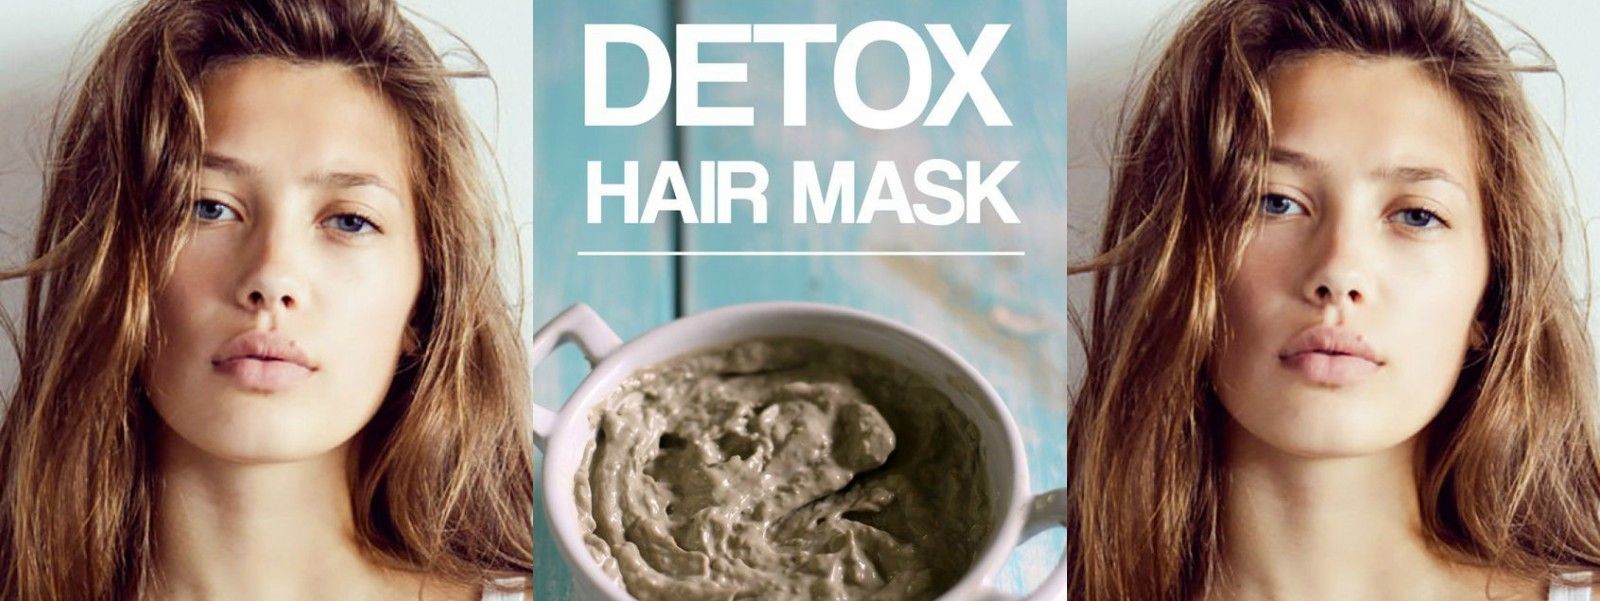 images easyblog articles 4372 detox hair mask 19c1f86d